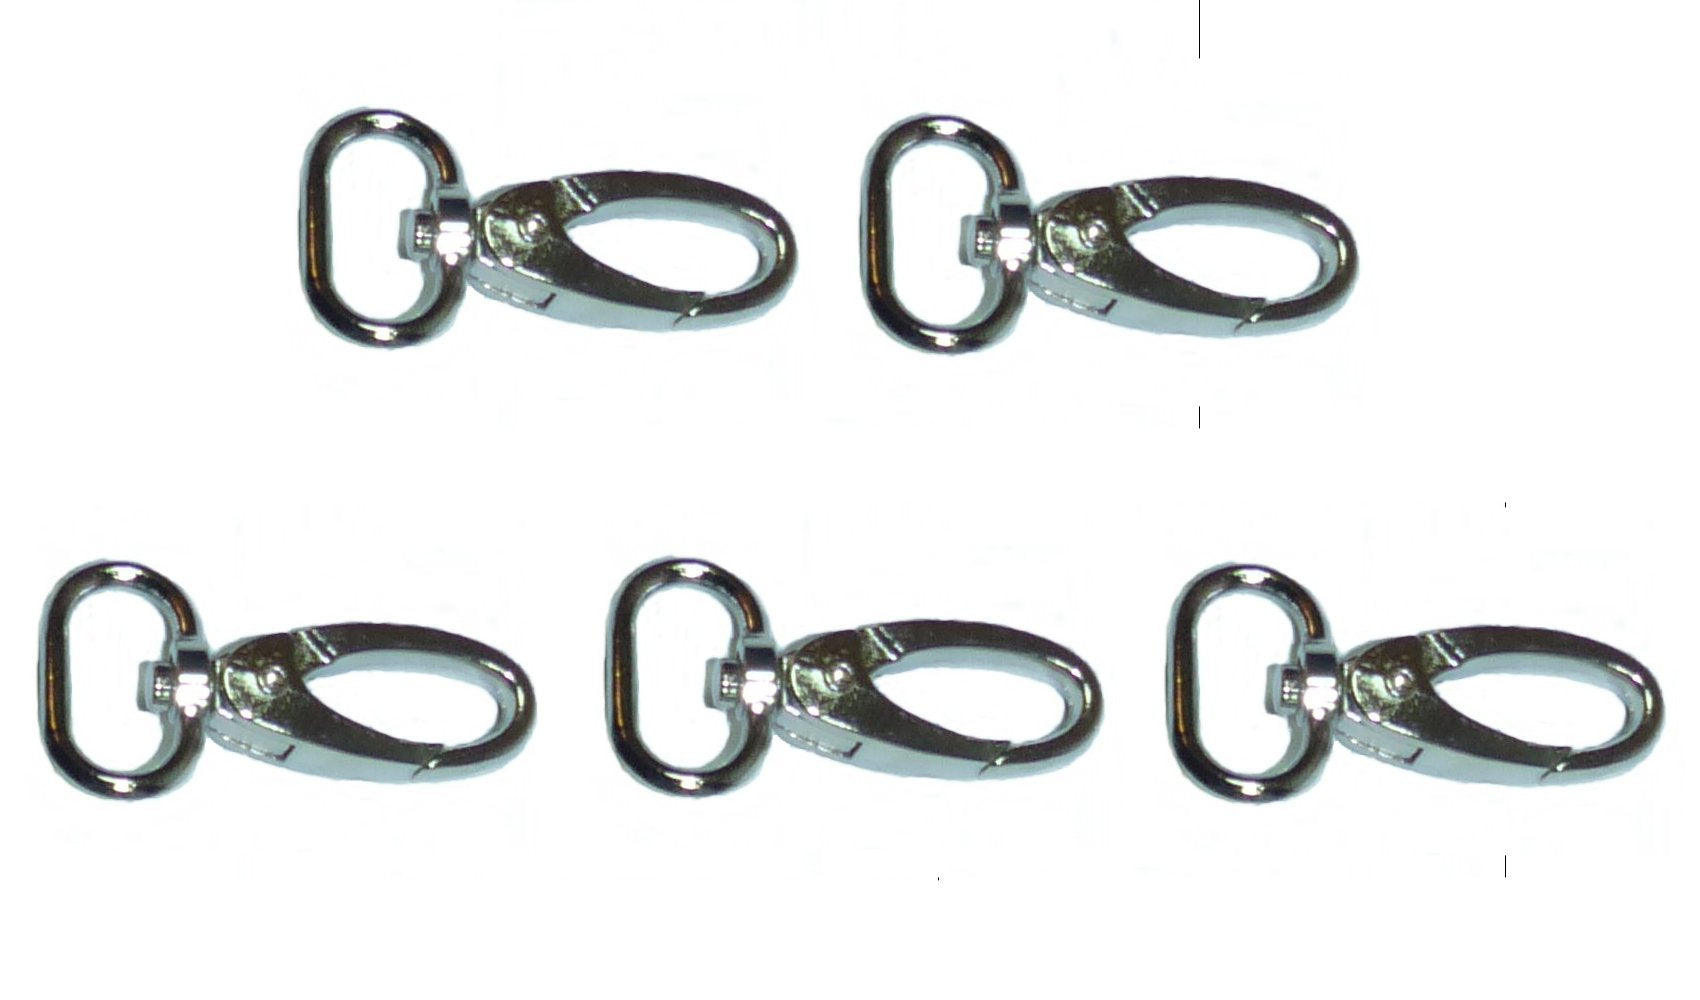 Benristraps 20mm alloy metal snap hooks (pack of 5)